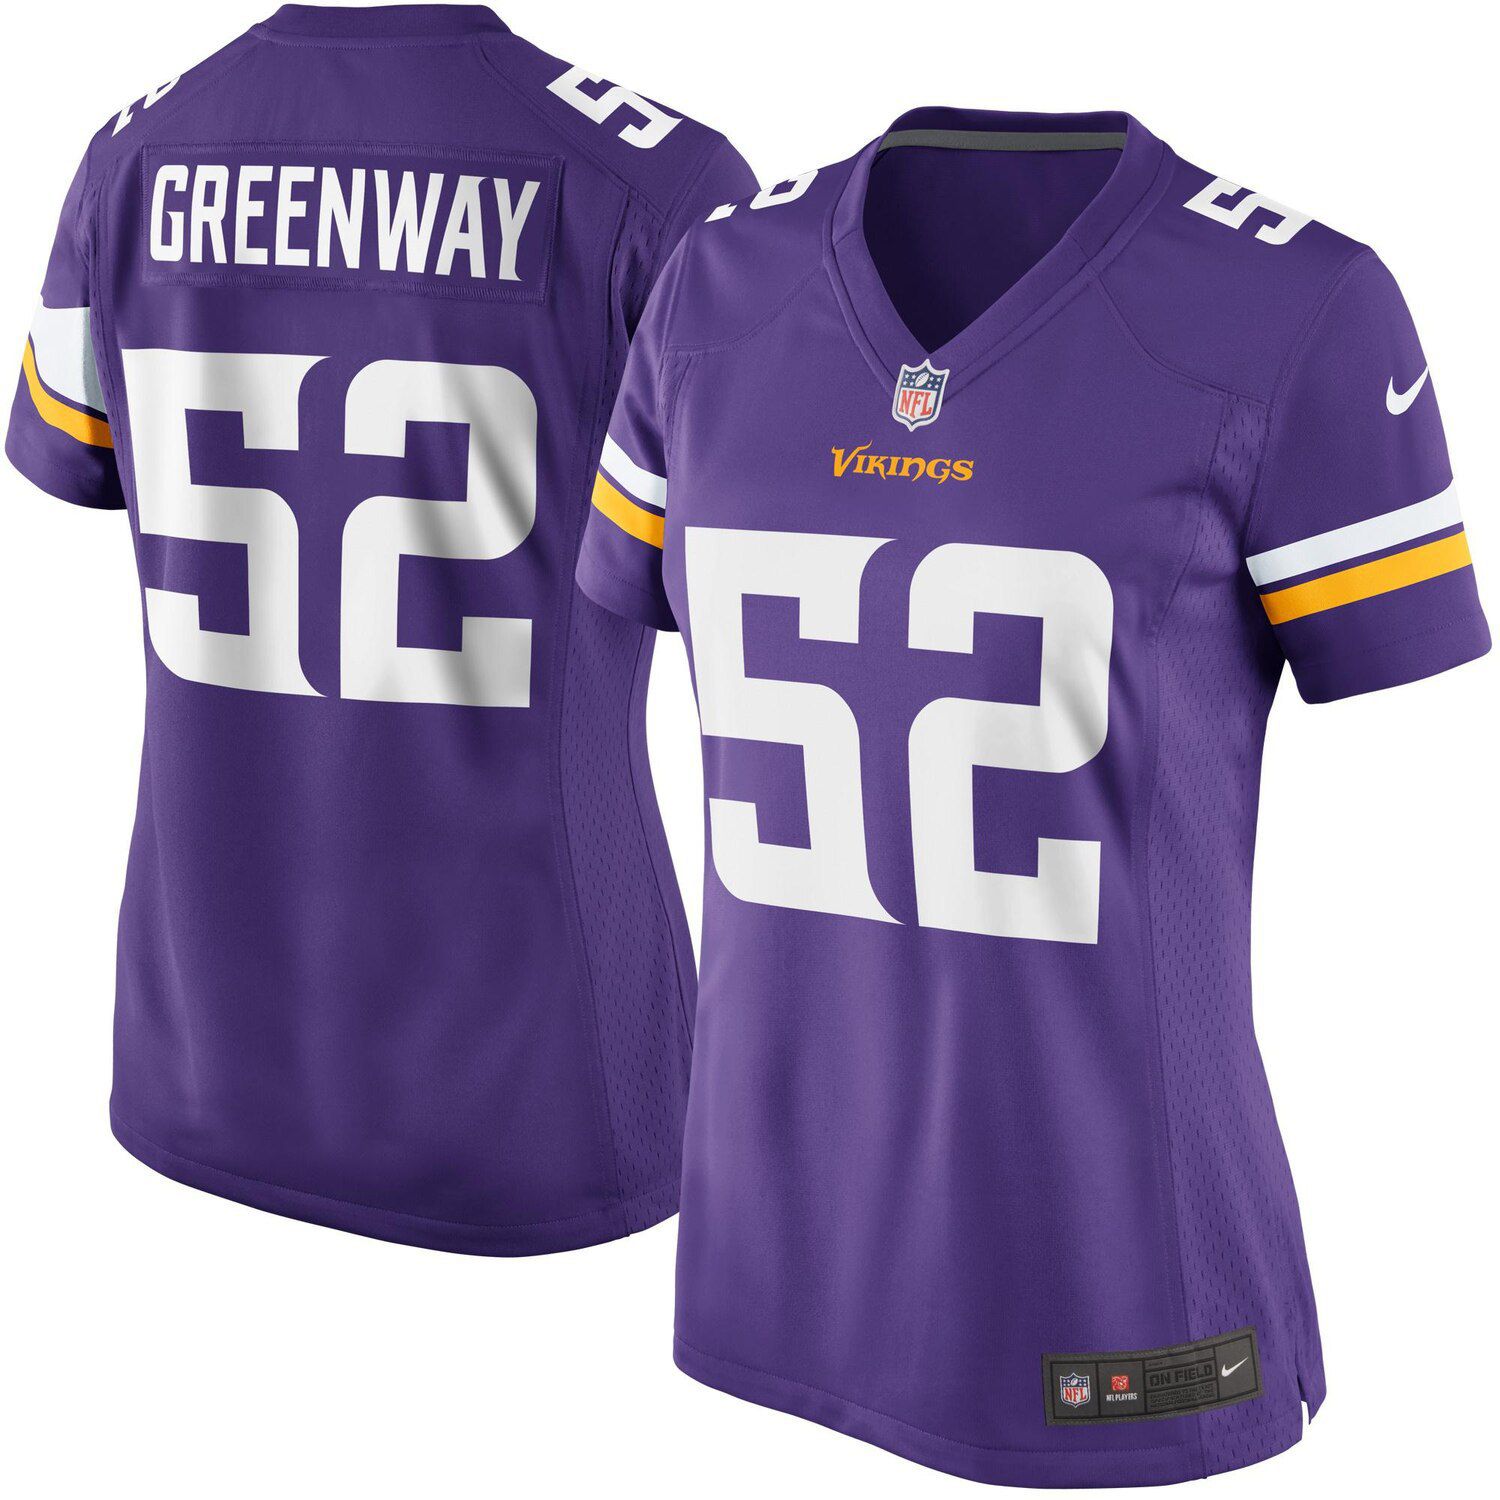 Chad Greenway Nike Purple Game Jersey